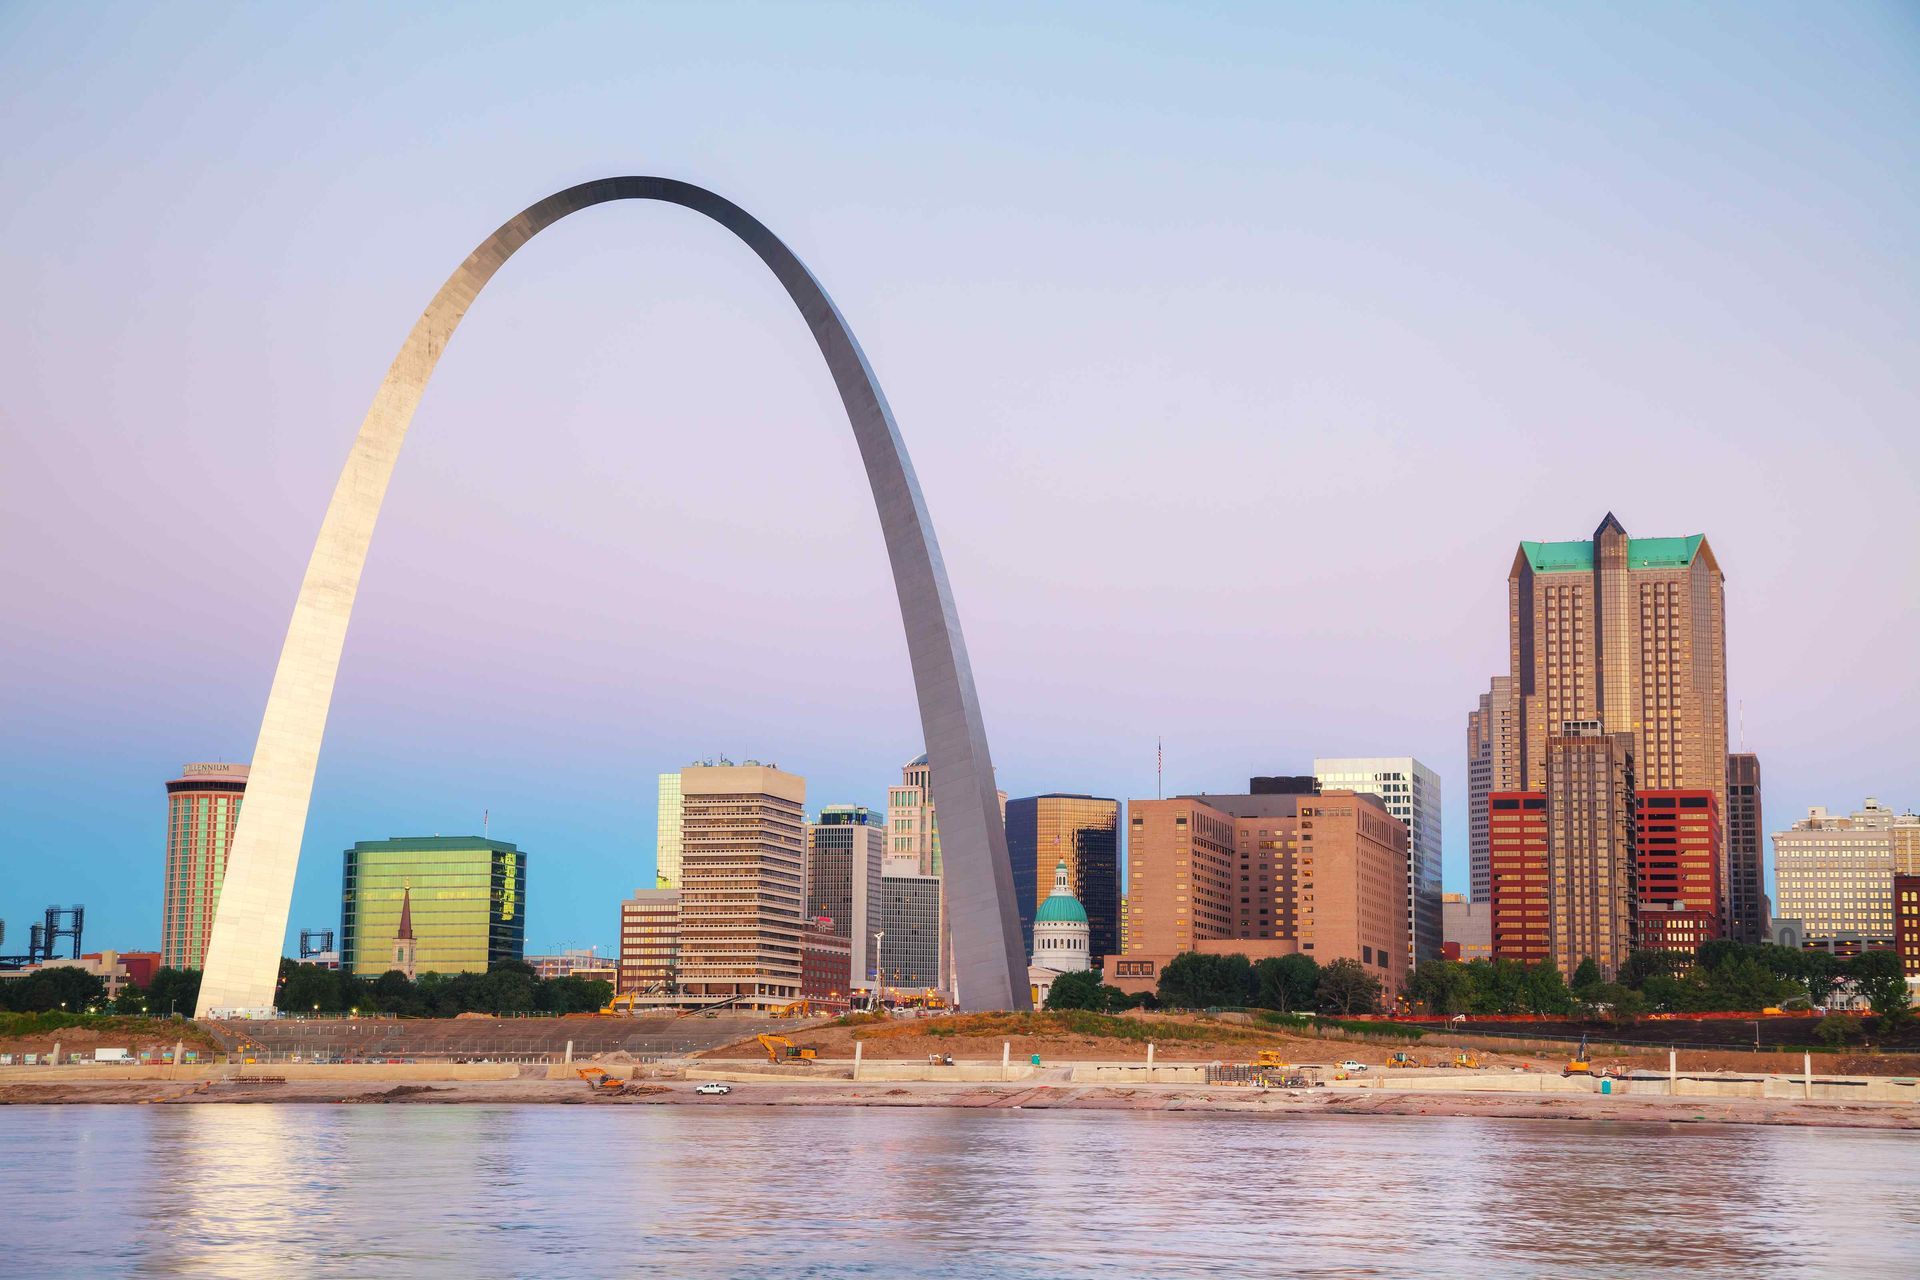 The St. Louis skyline behind the impressive Gateway Arch.